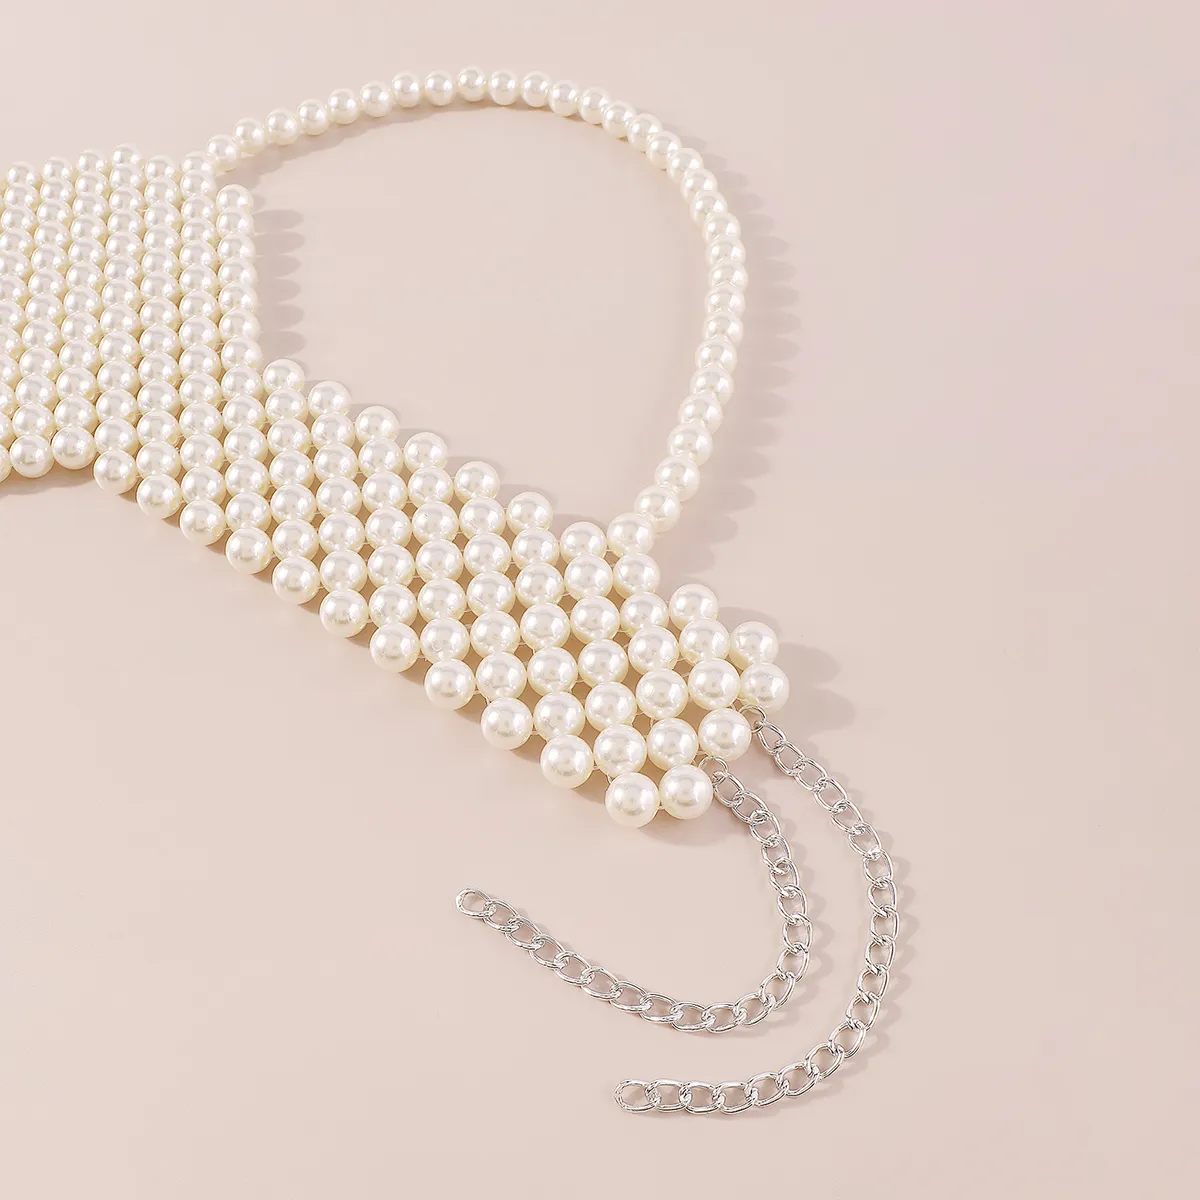 Pin on Fashion body chains jewelry